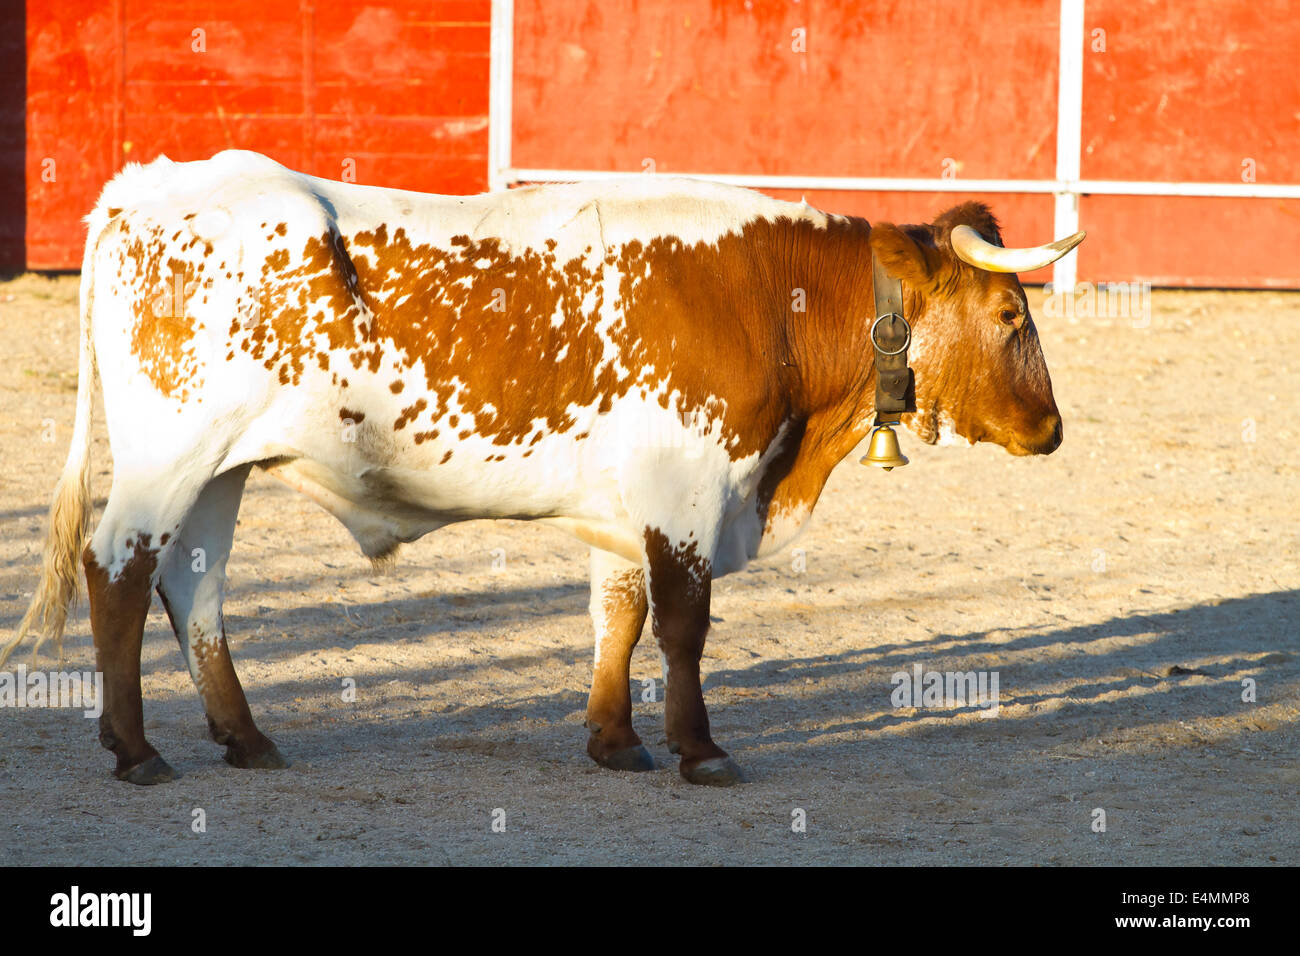 Bull fighting photo de l'Espagne. Brown bull Banque D'Images